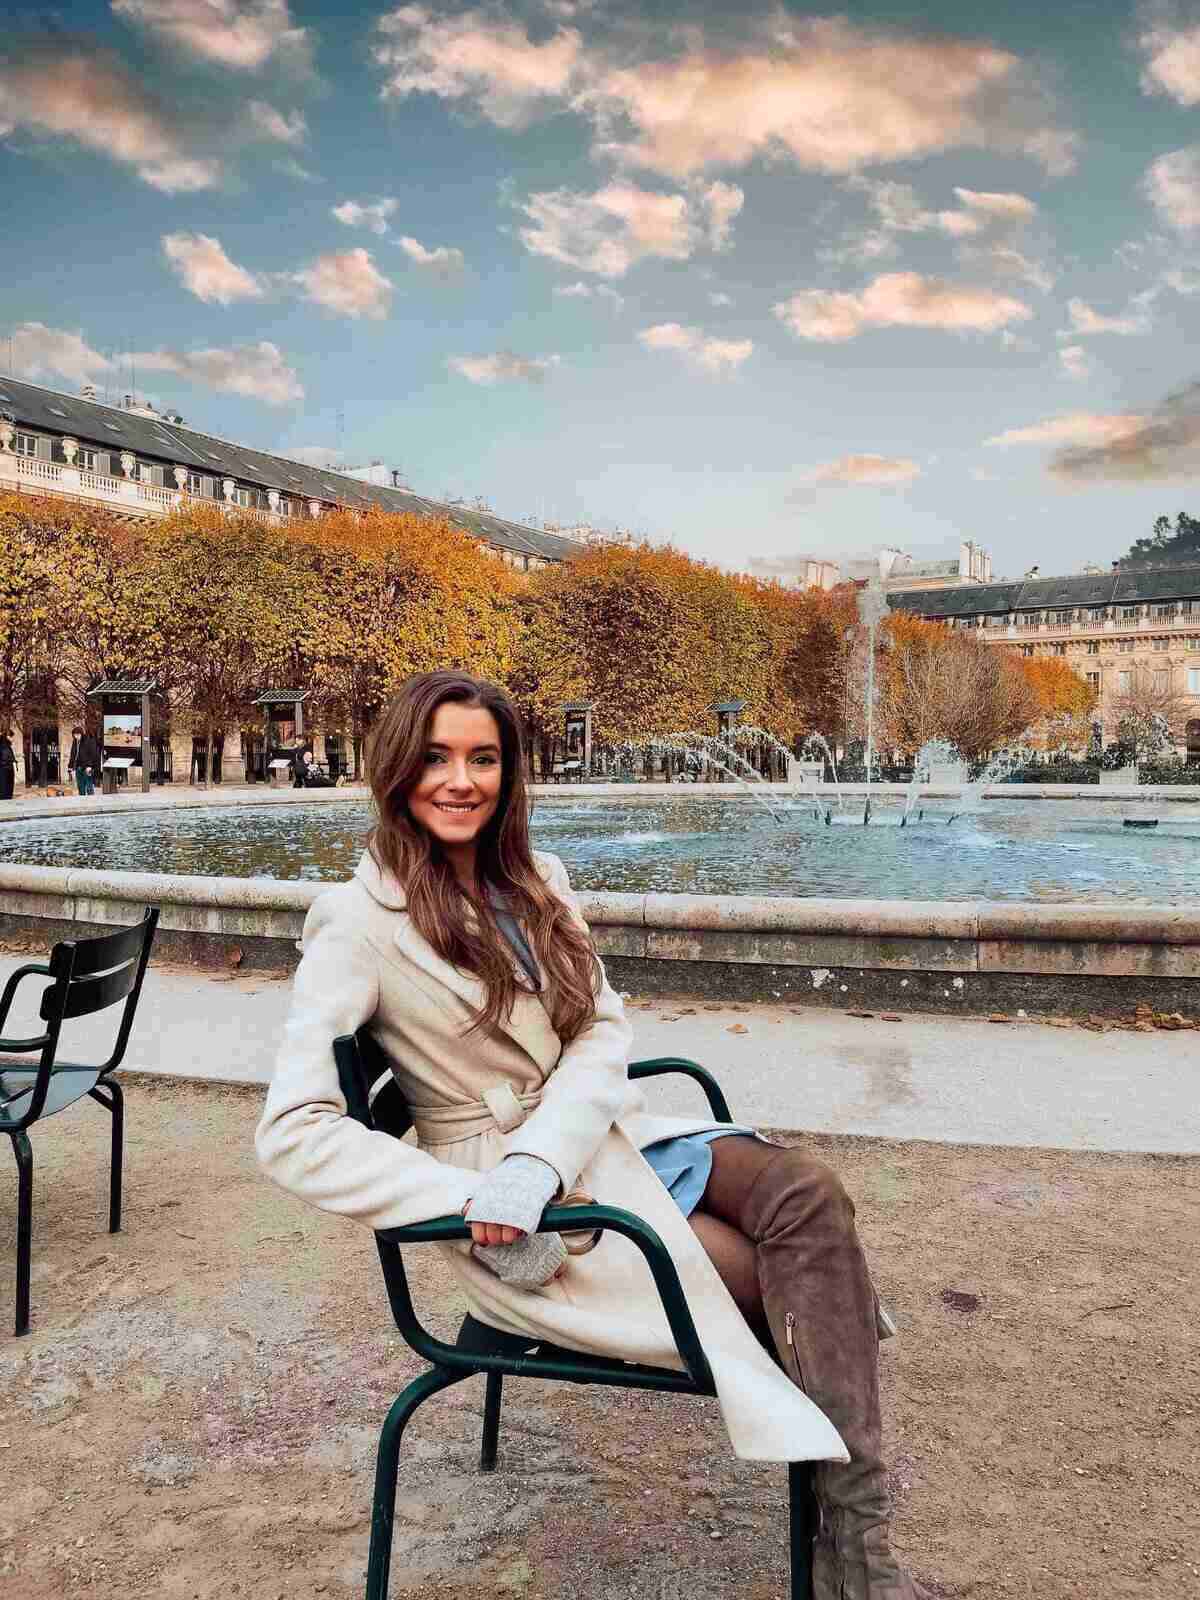 Palais Royal Fountain